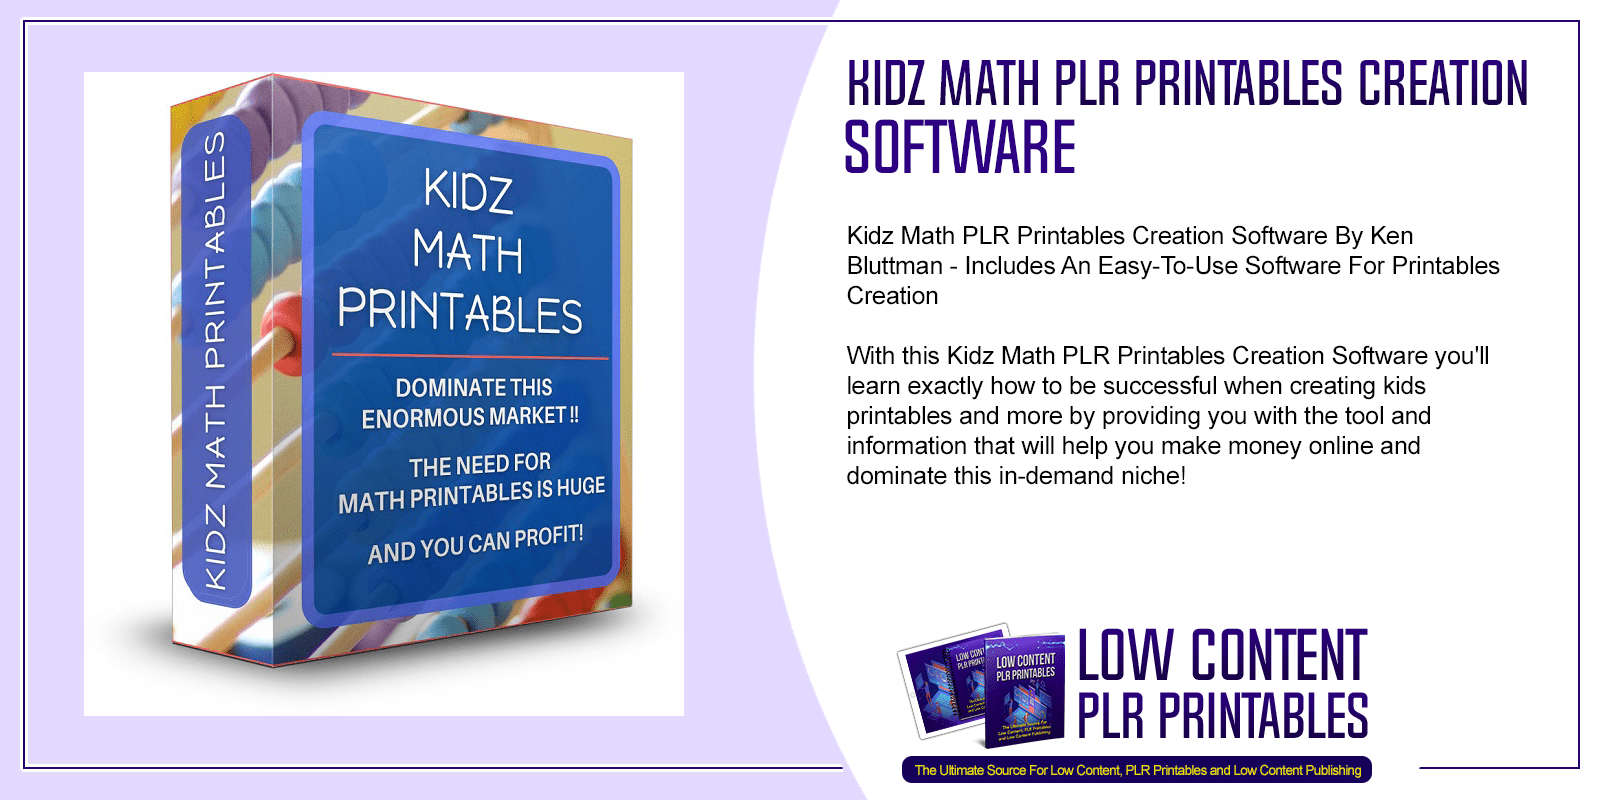 Kidz Math PLR Printables Creation Software